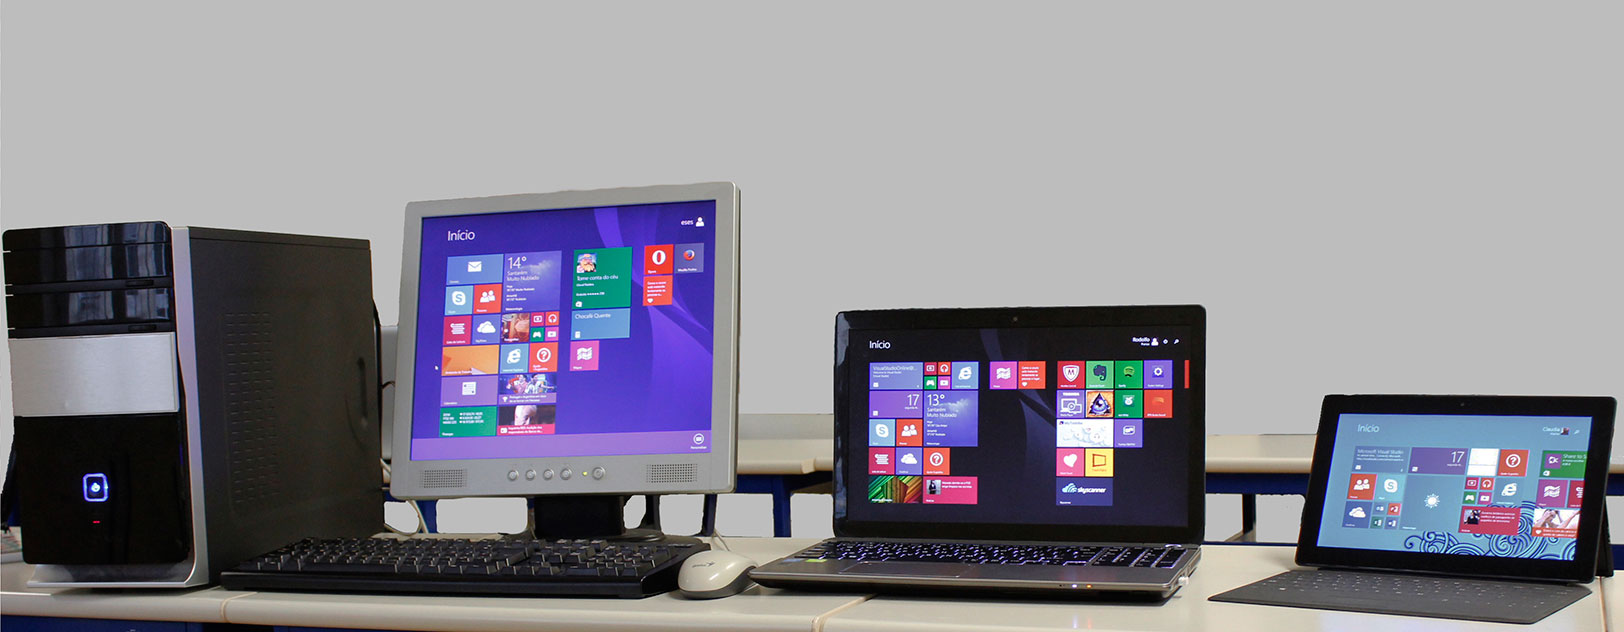 Figura 5 - Tipos de computadores (da esquerda para a direita): computador de secretária, computador portátil e tablet 